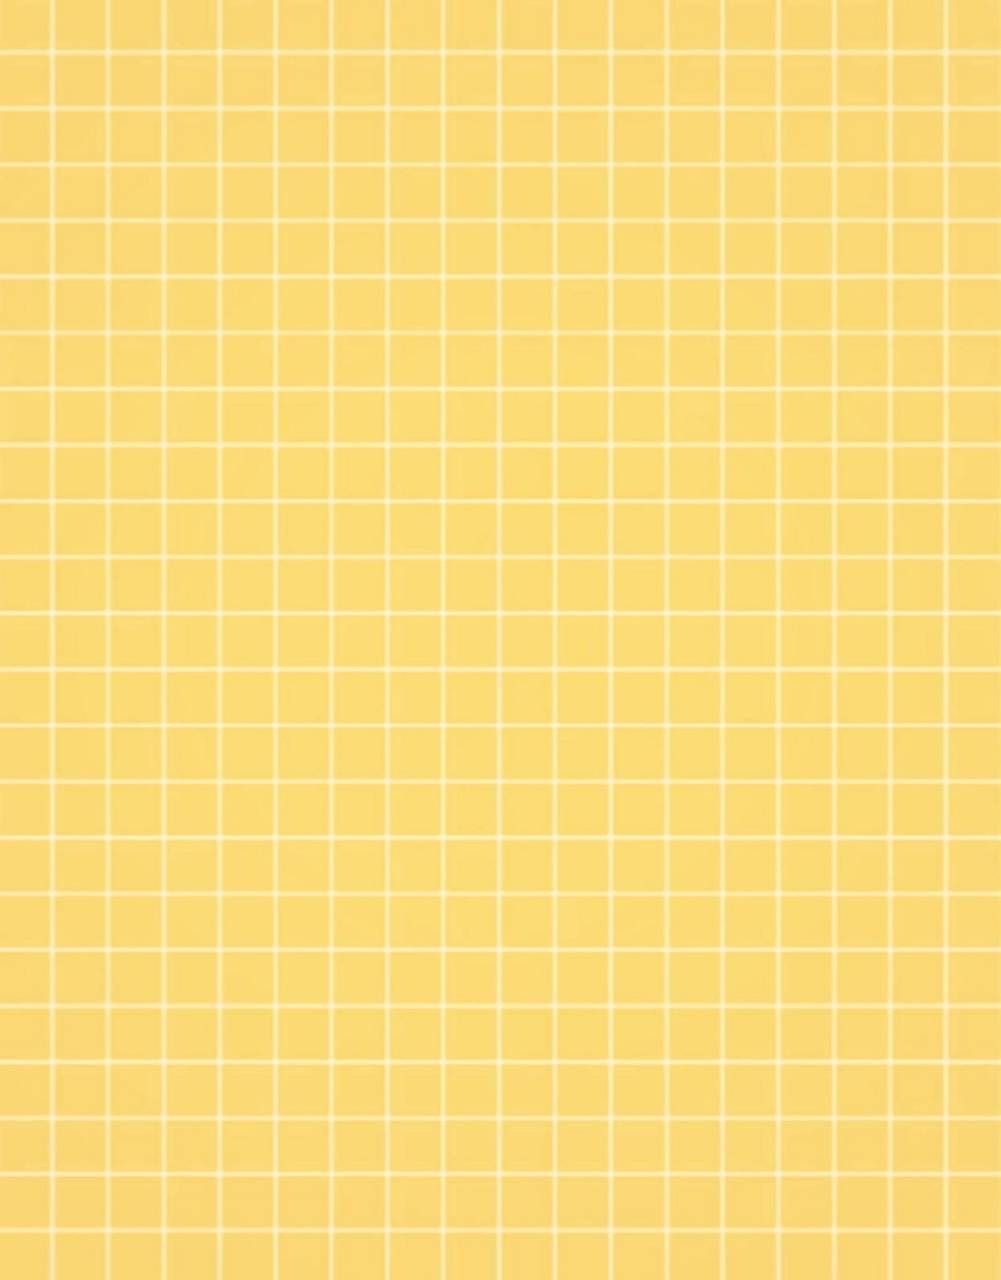 Yellow aesthetic wallpaper